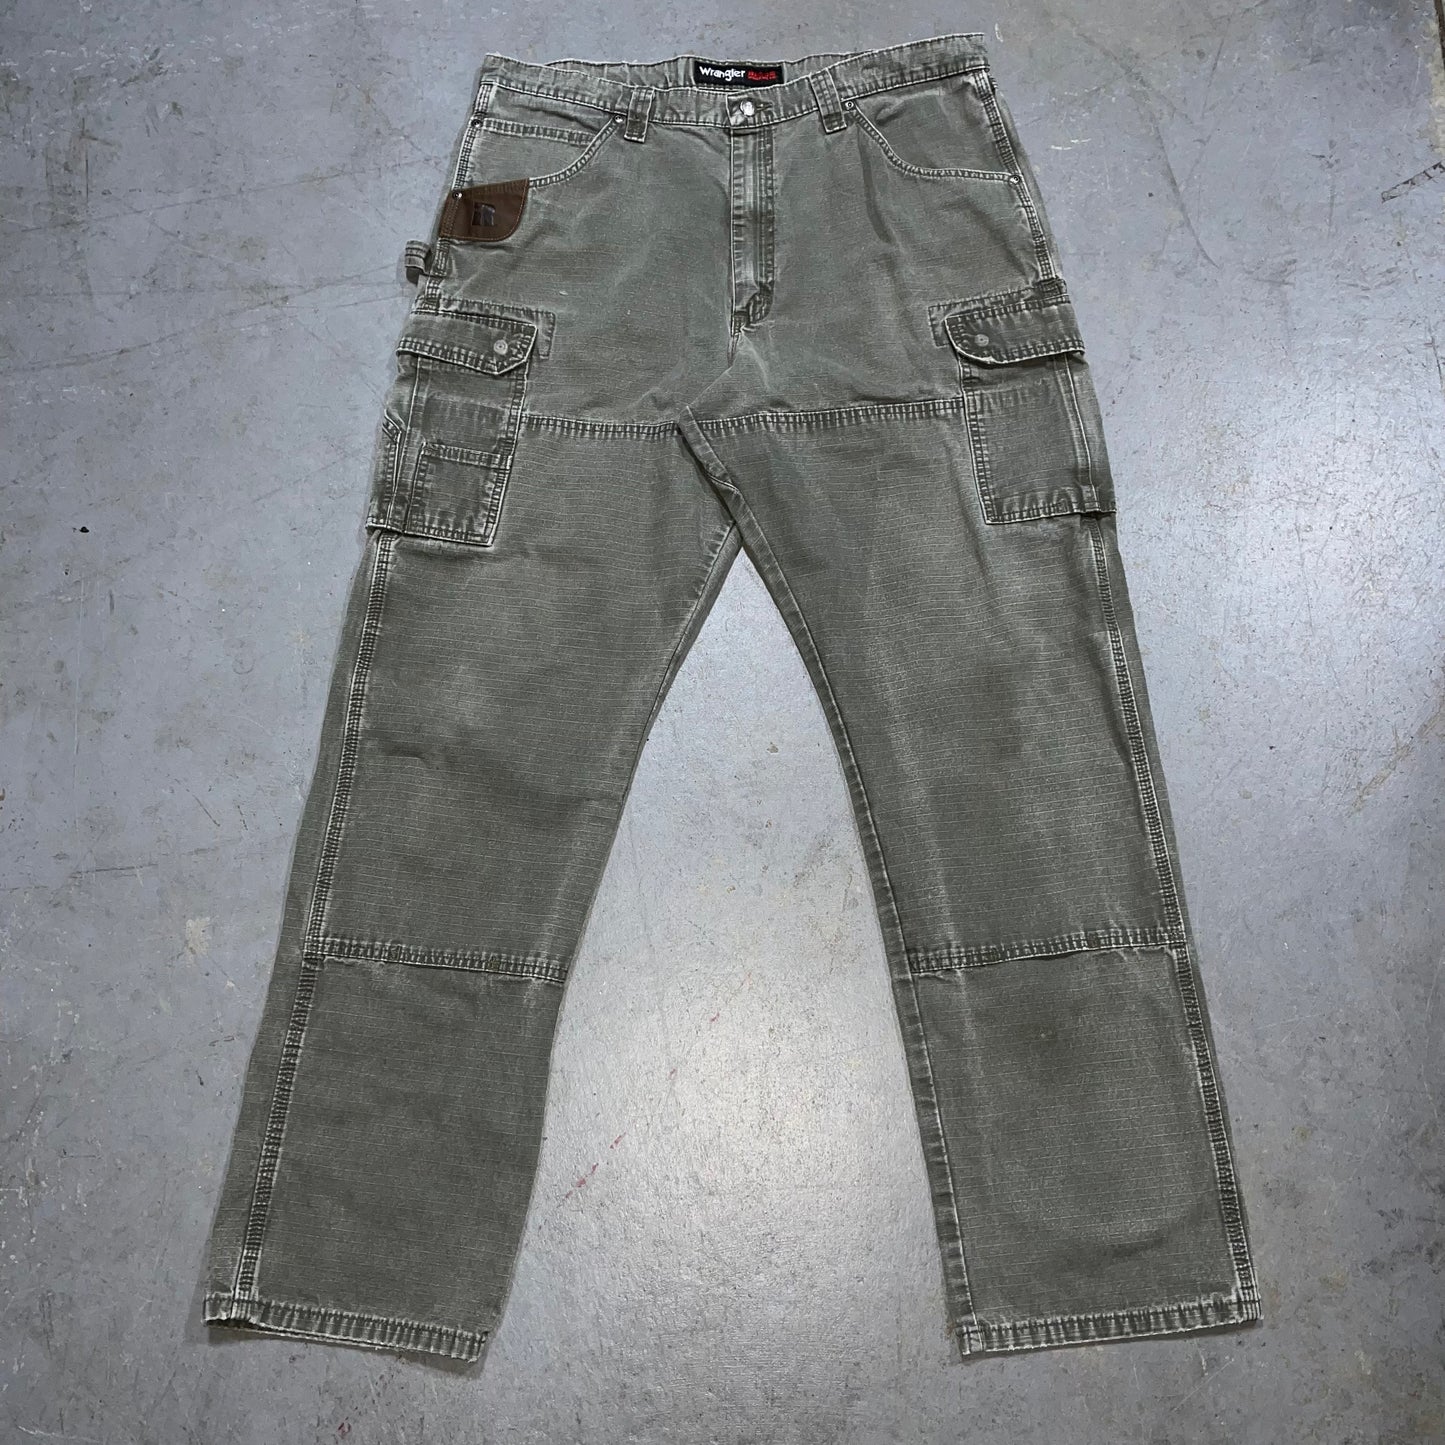 Wrangler Riggs Workwear Cargo Pants. Size 38x36